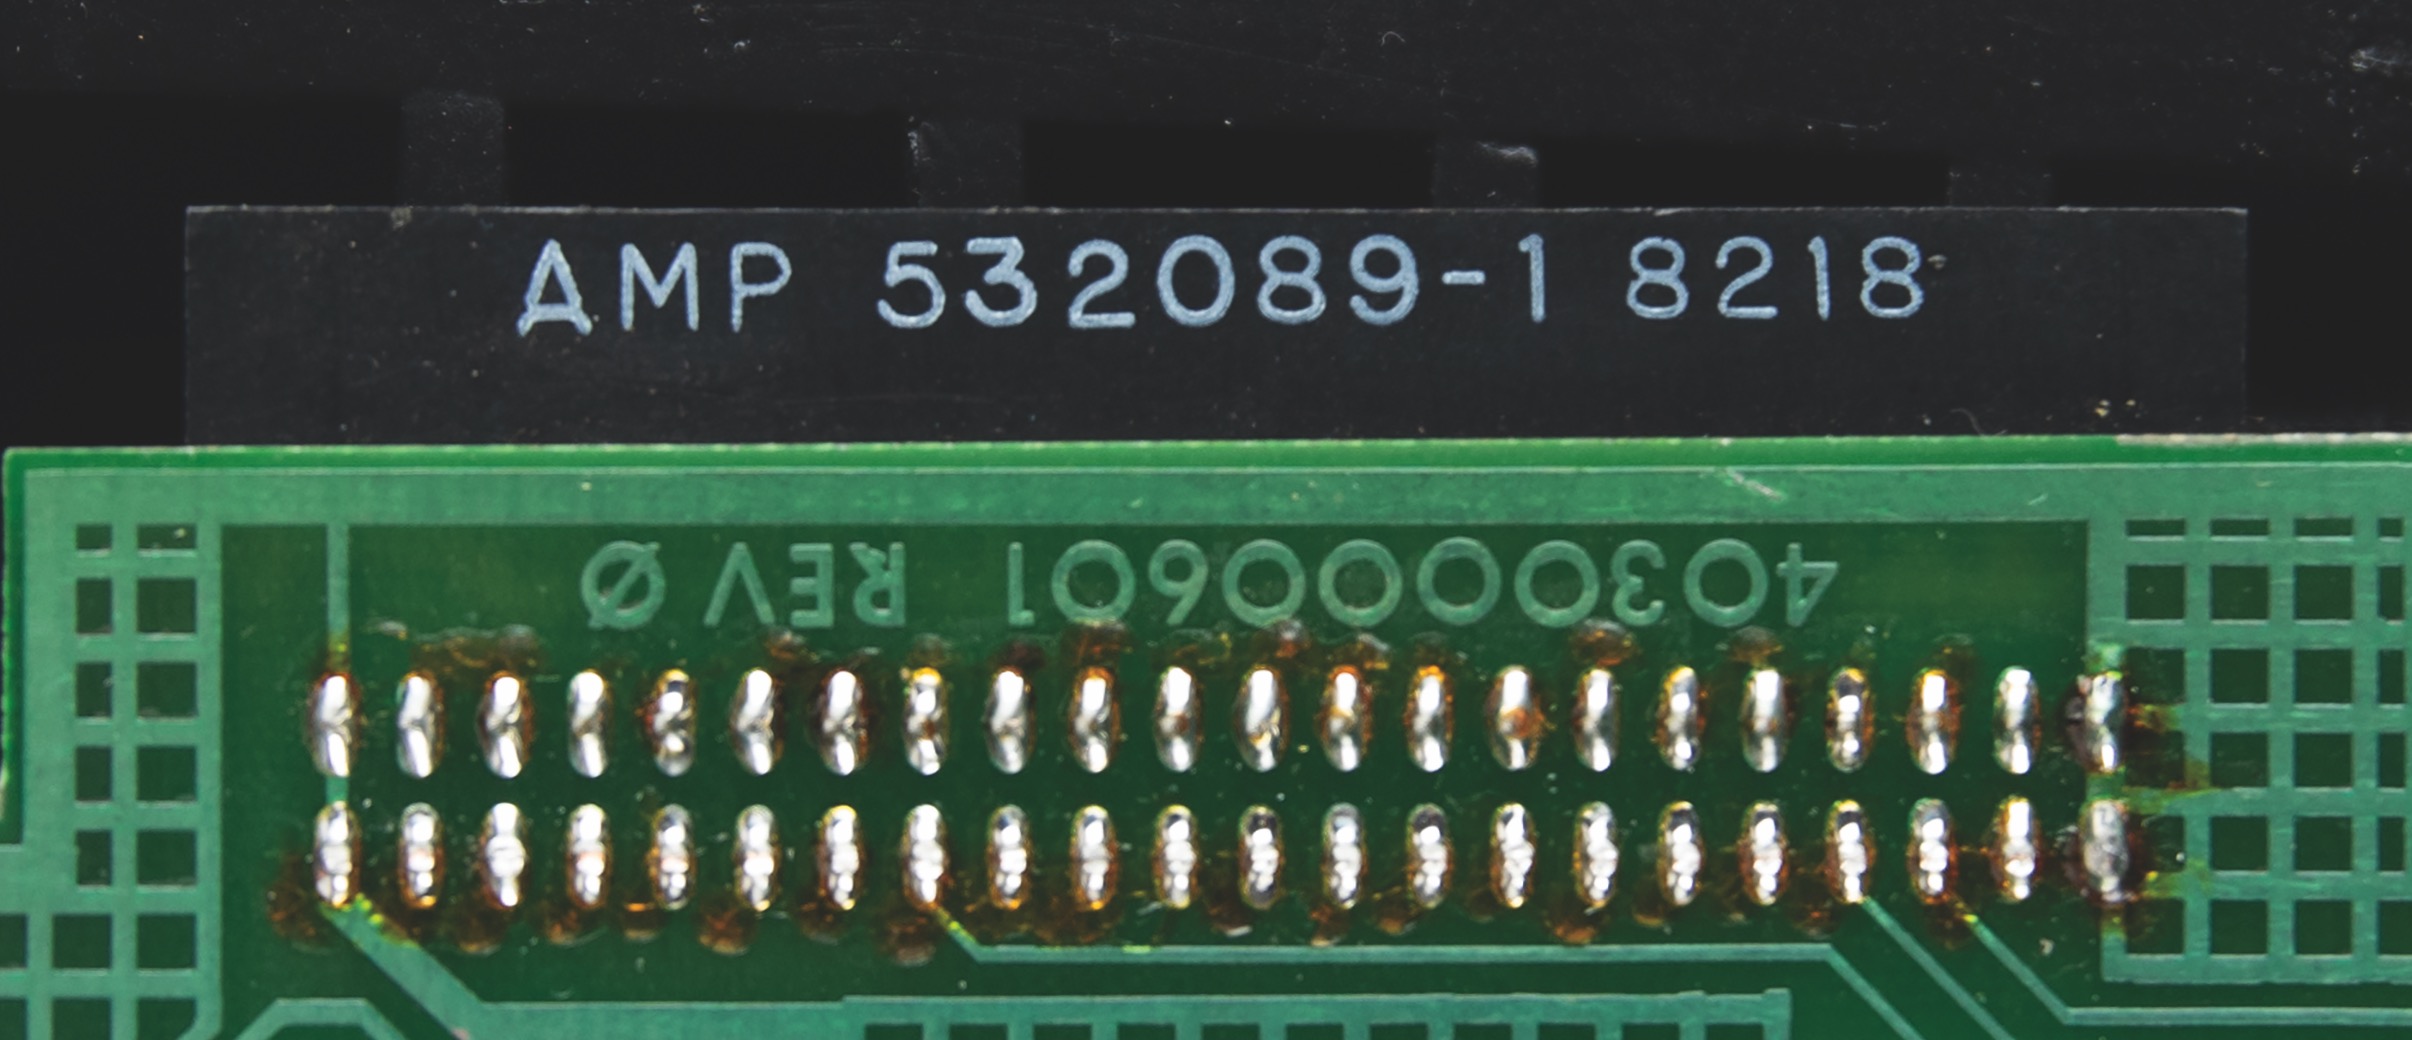 Lot #8054 Atari CX3000 Graduate Computer Keyboard Prototype - Image 7